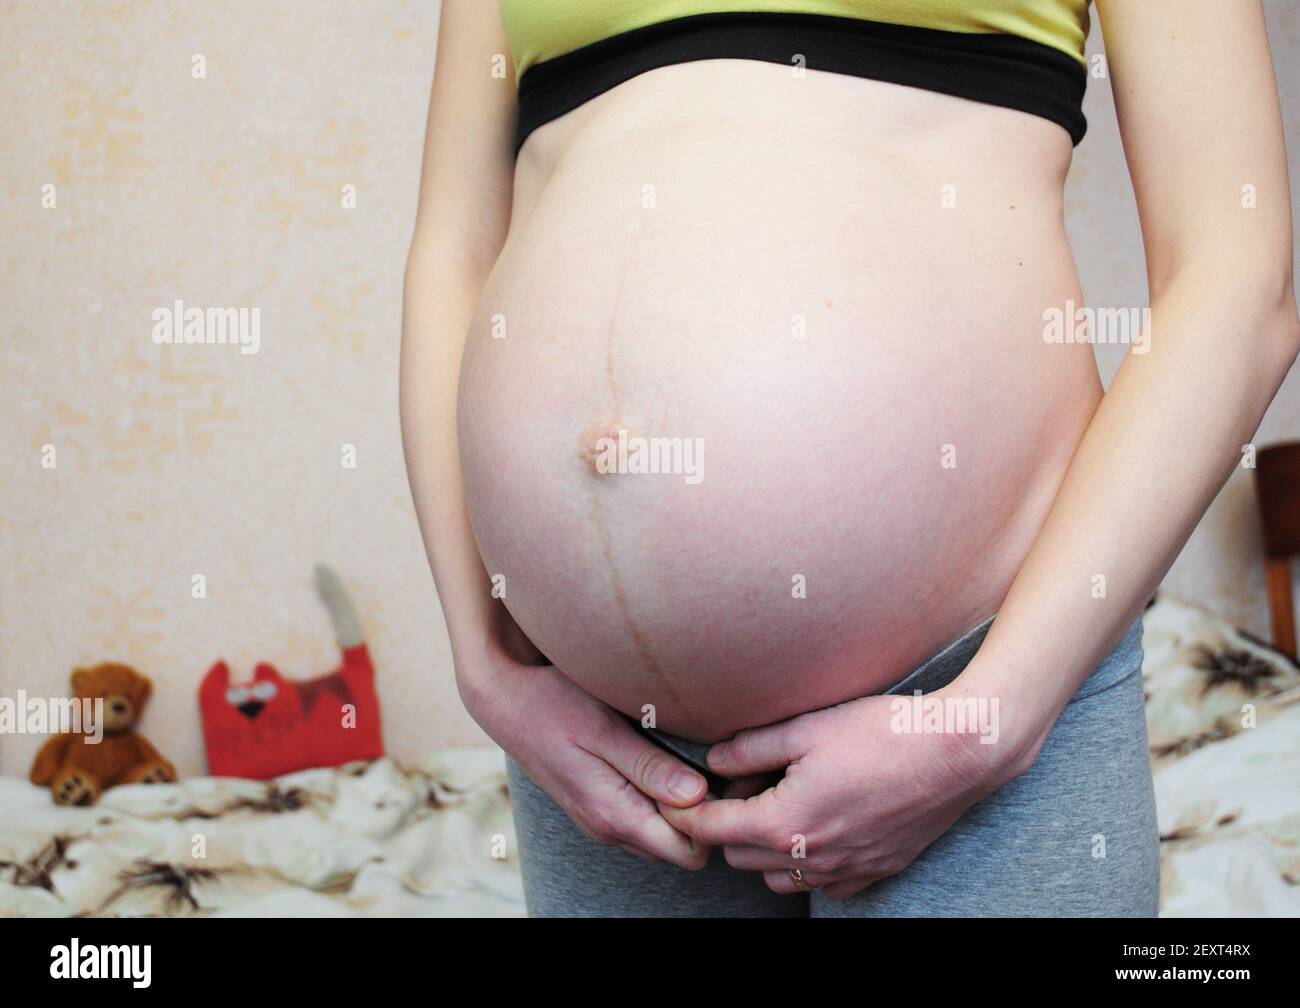 Pregnant ladies bustform 9 month